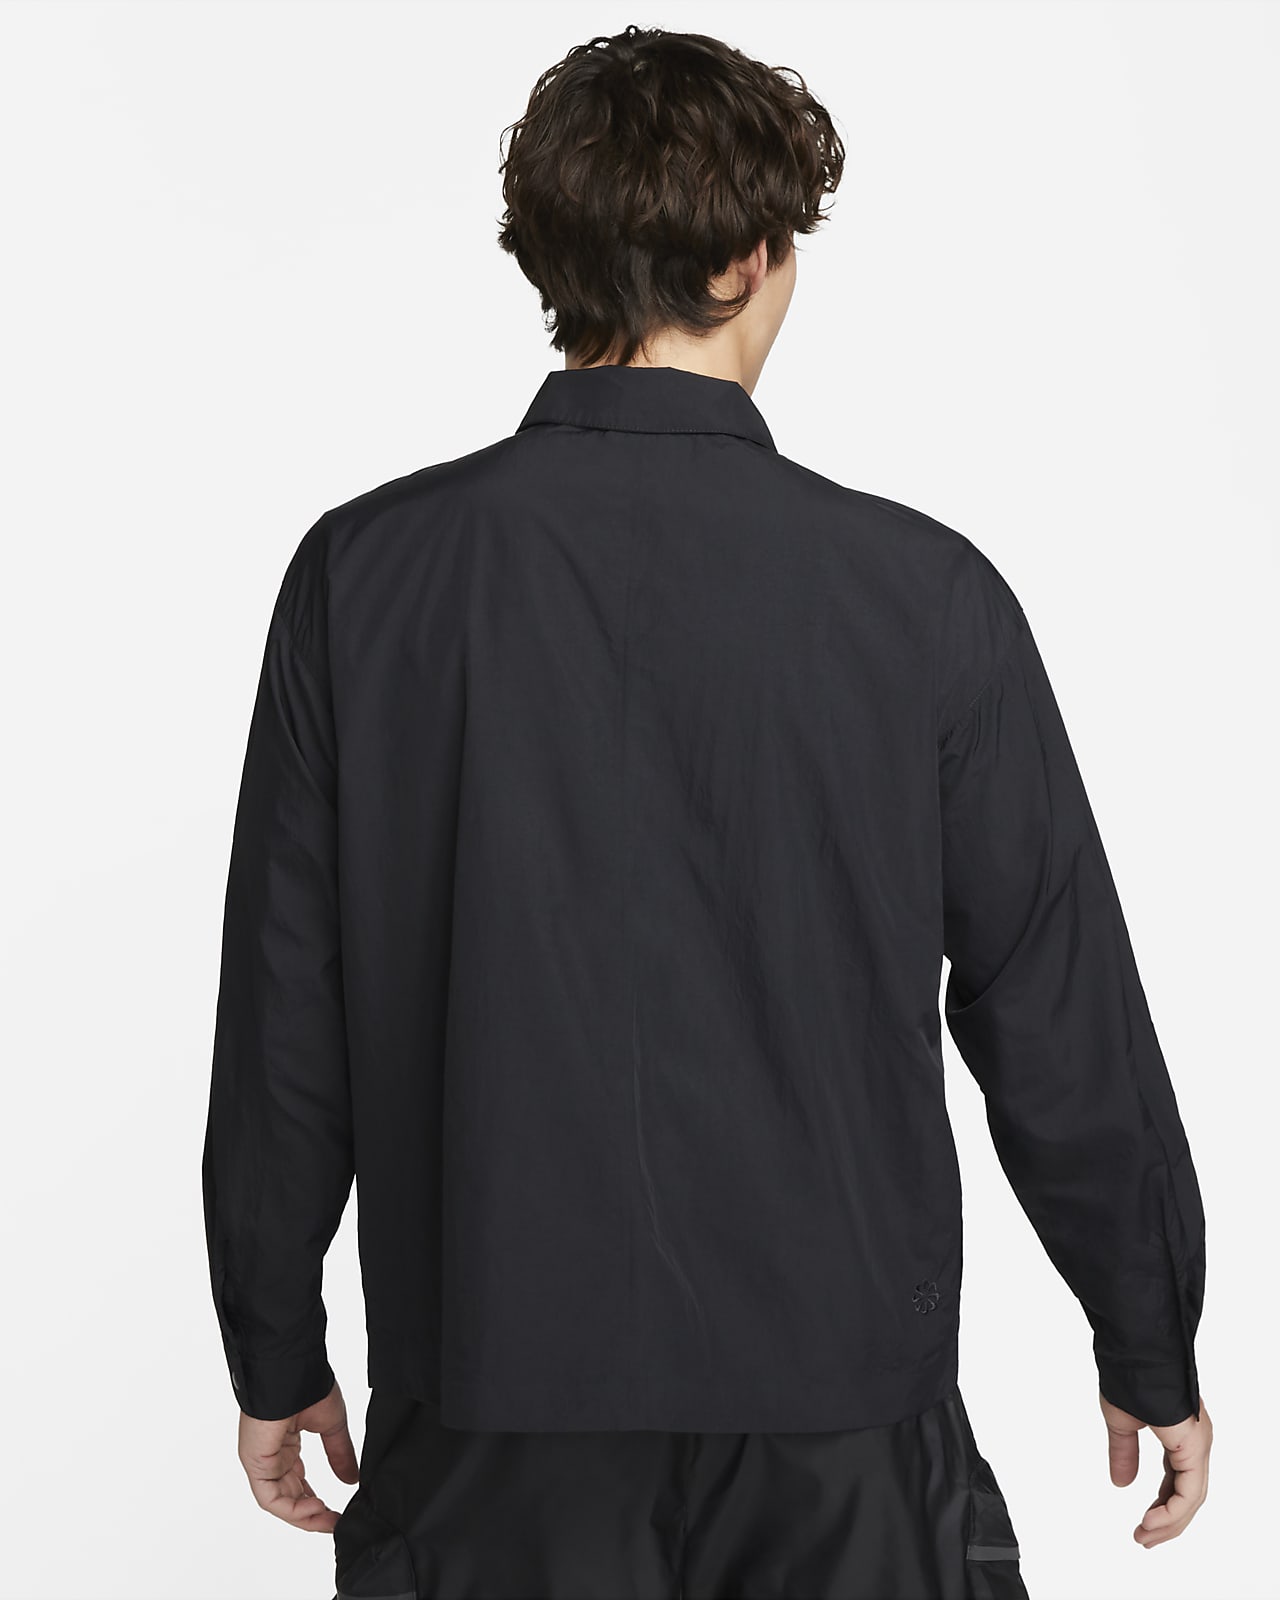 Nike Sportswear Tech Pack Men's Woven Long-Sleeve Shirt.